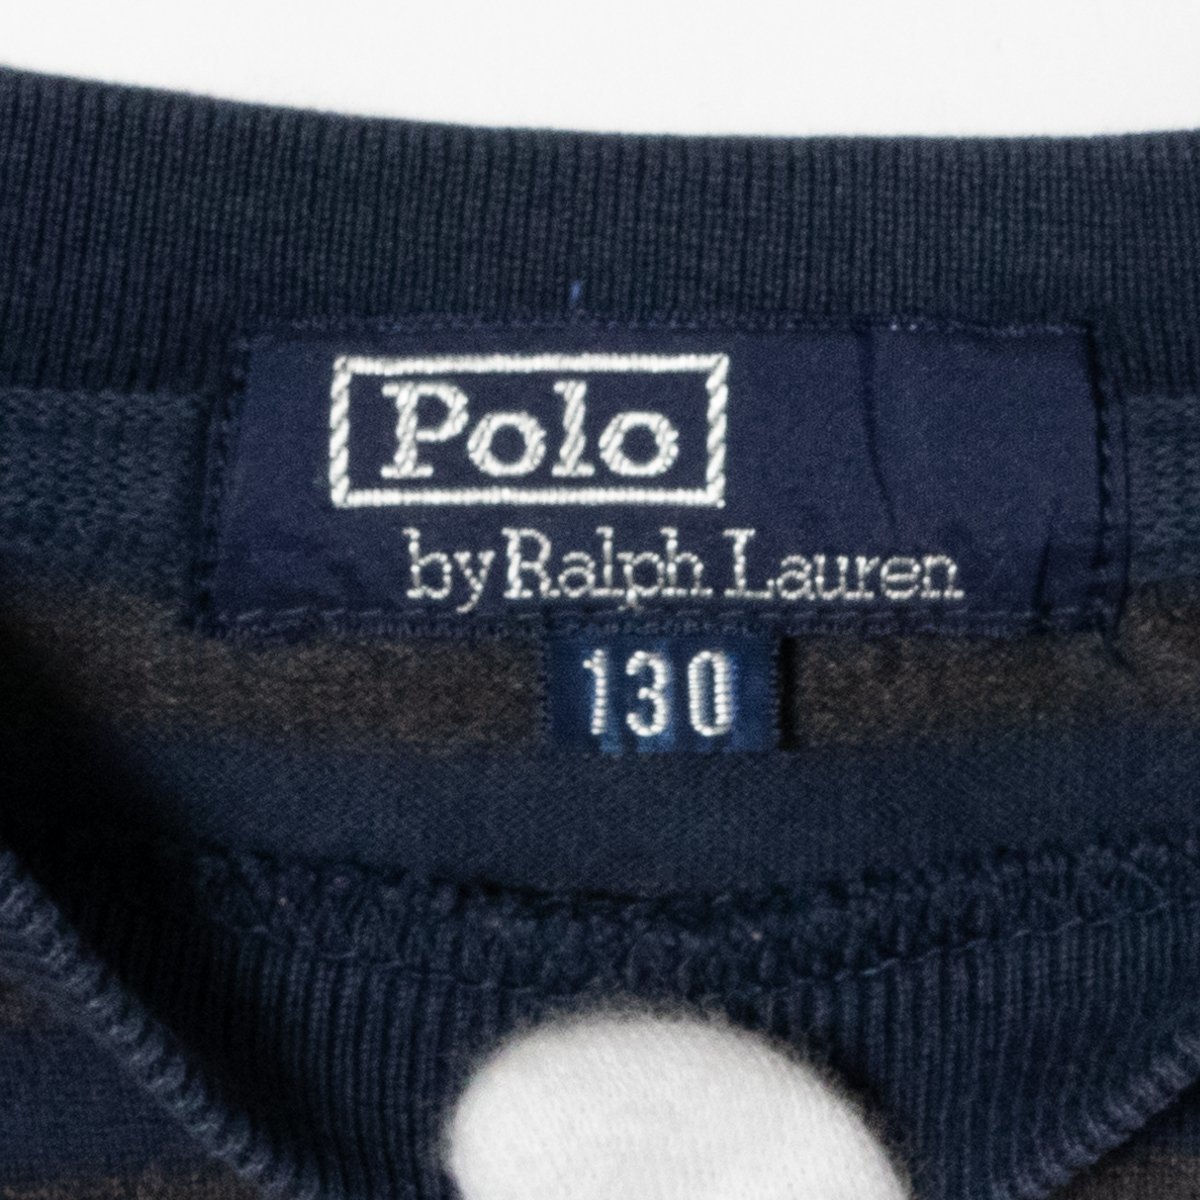 Polo by RalphLauren Polo bai Ralph Lauren Kids child clothes border cut and sewn 130 long sleeve navy × gray navy blue sleeve rib long T T-shirt spring 